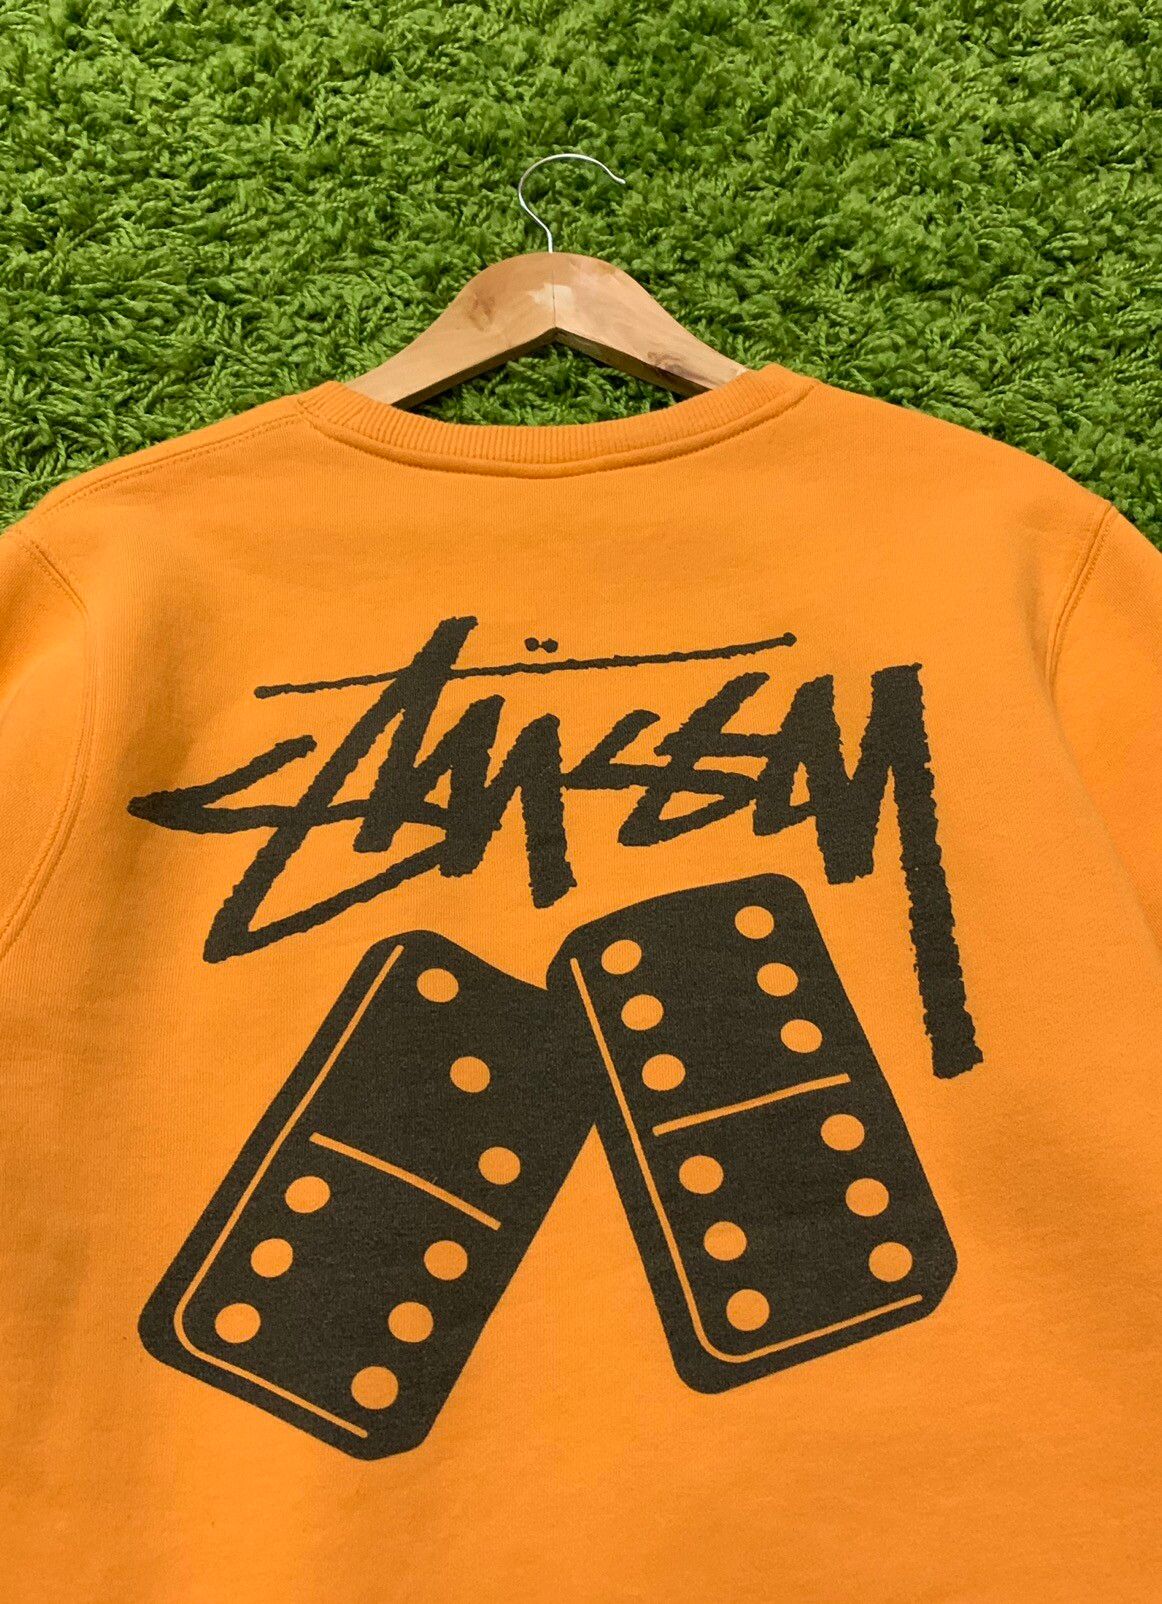 Vintage 🔥Rare Stussy Dominoes Crewneck Sweatshirt Small Y2K Skate Size US S / EU 44-46 / 1 - 2 Preview